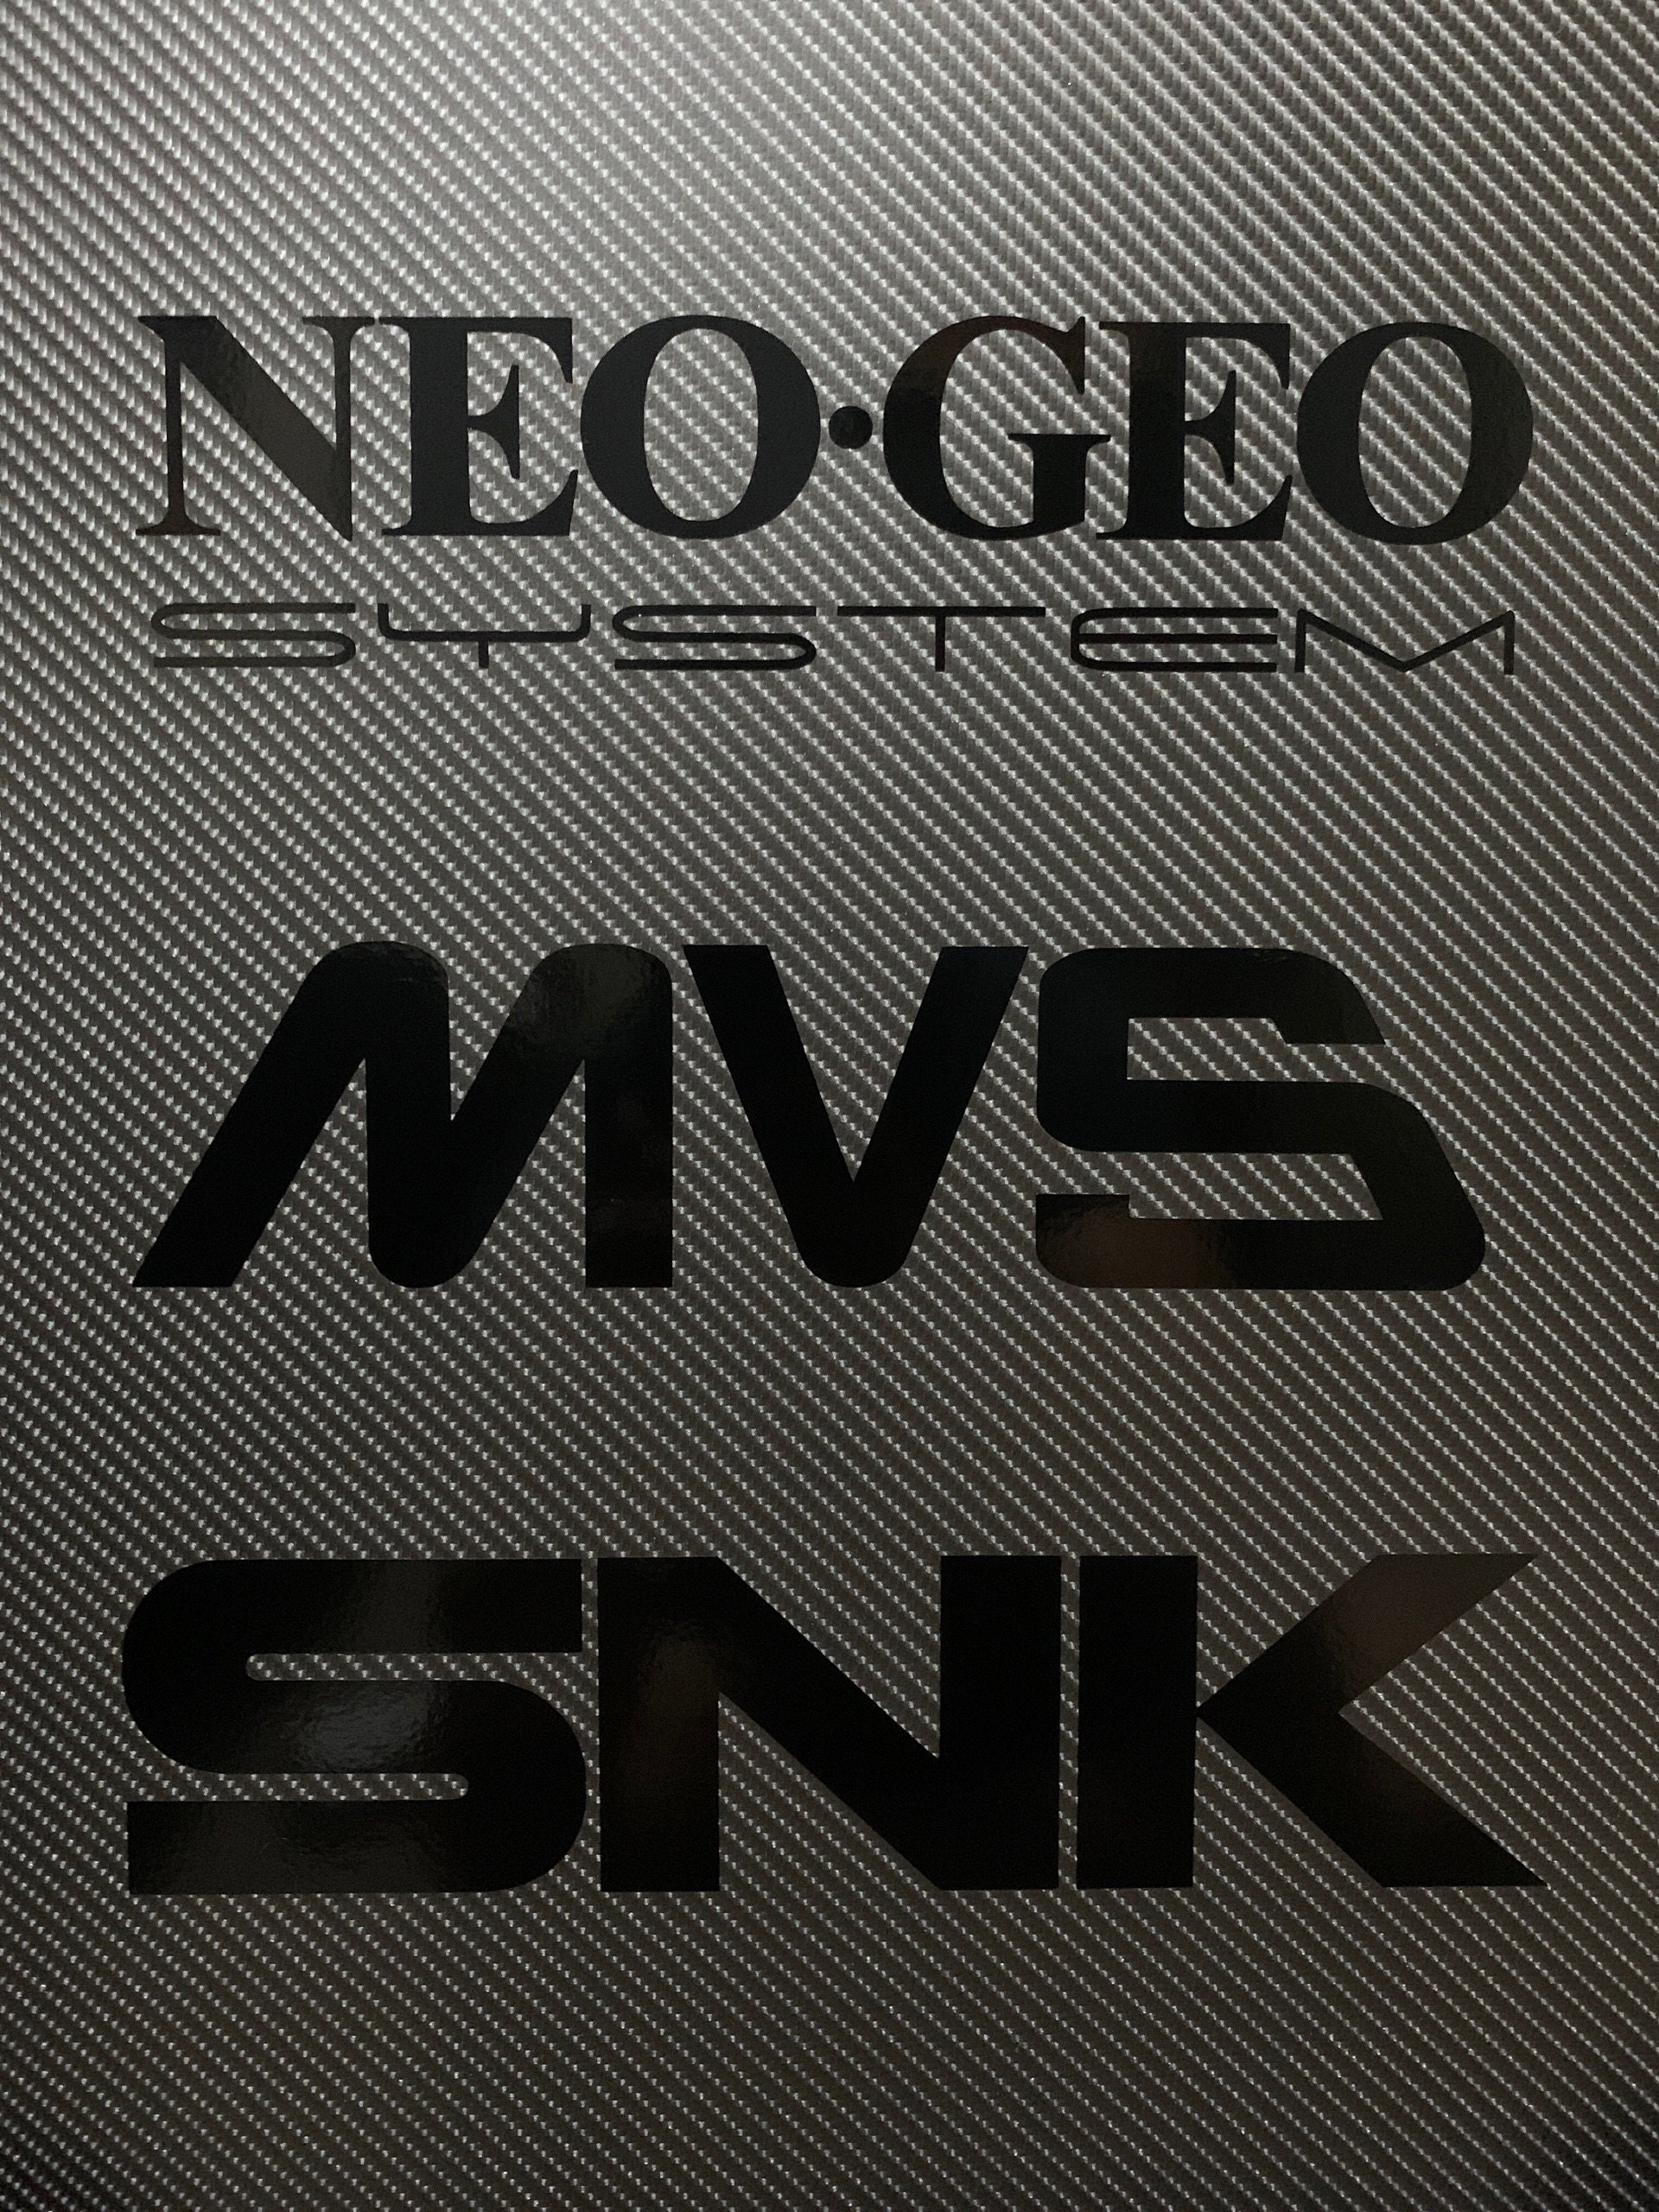 Read description * Arcade style Vinyl Decal Stickers NeoGeo MVS SNK Multi pack 